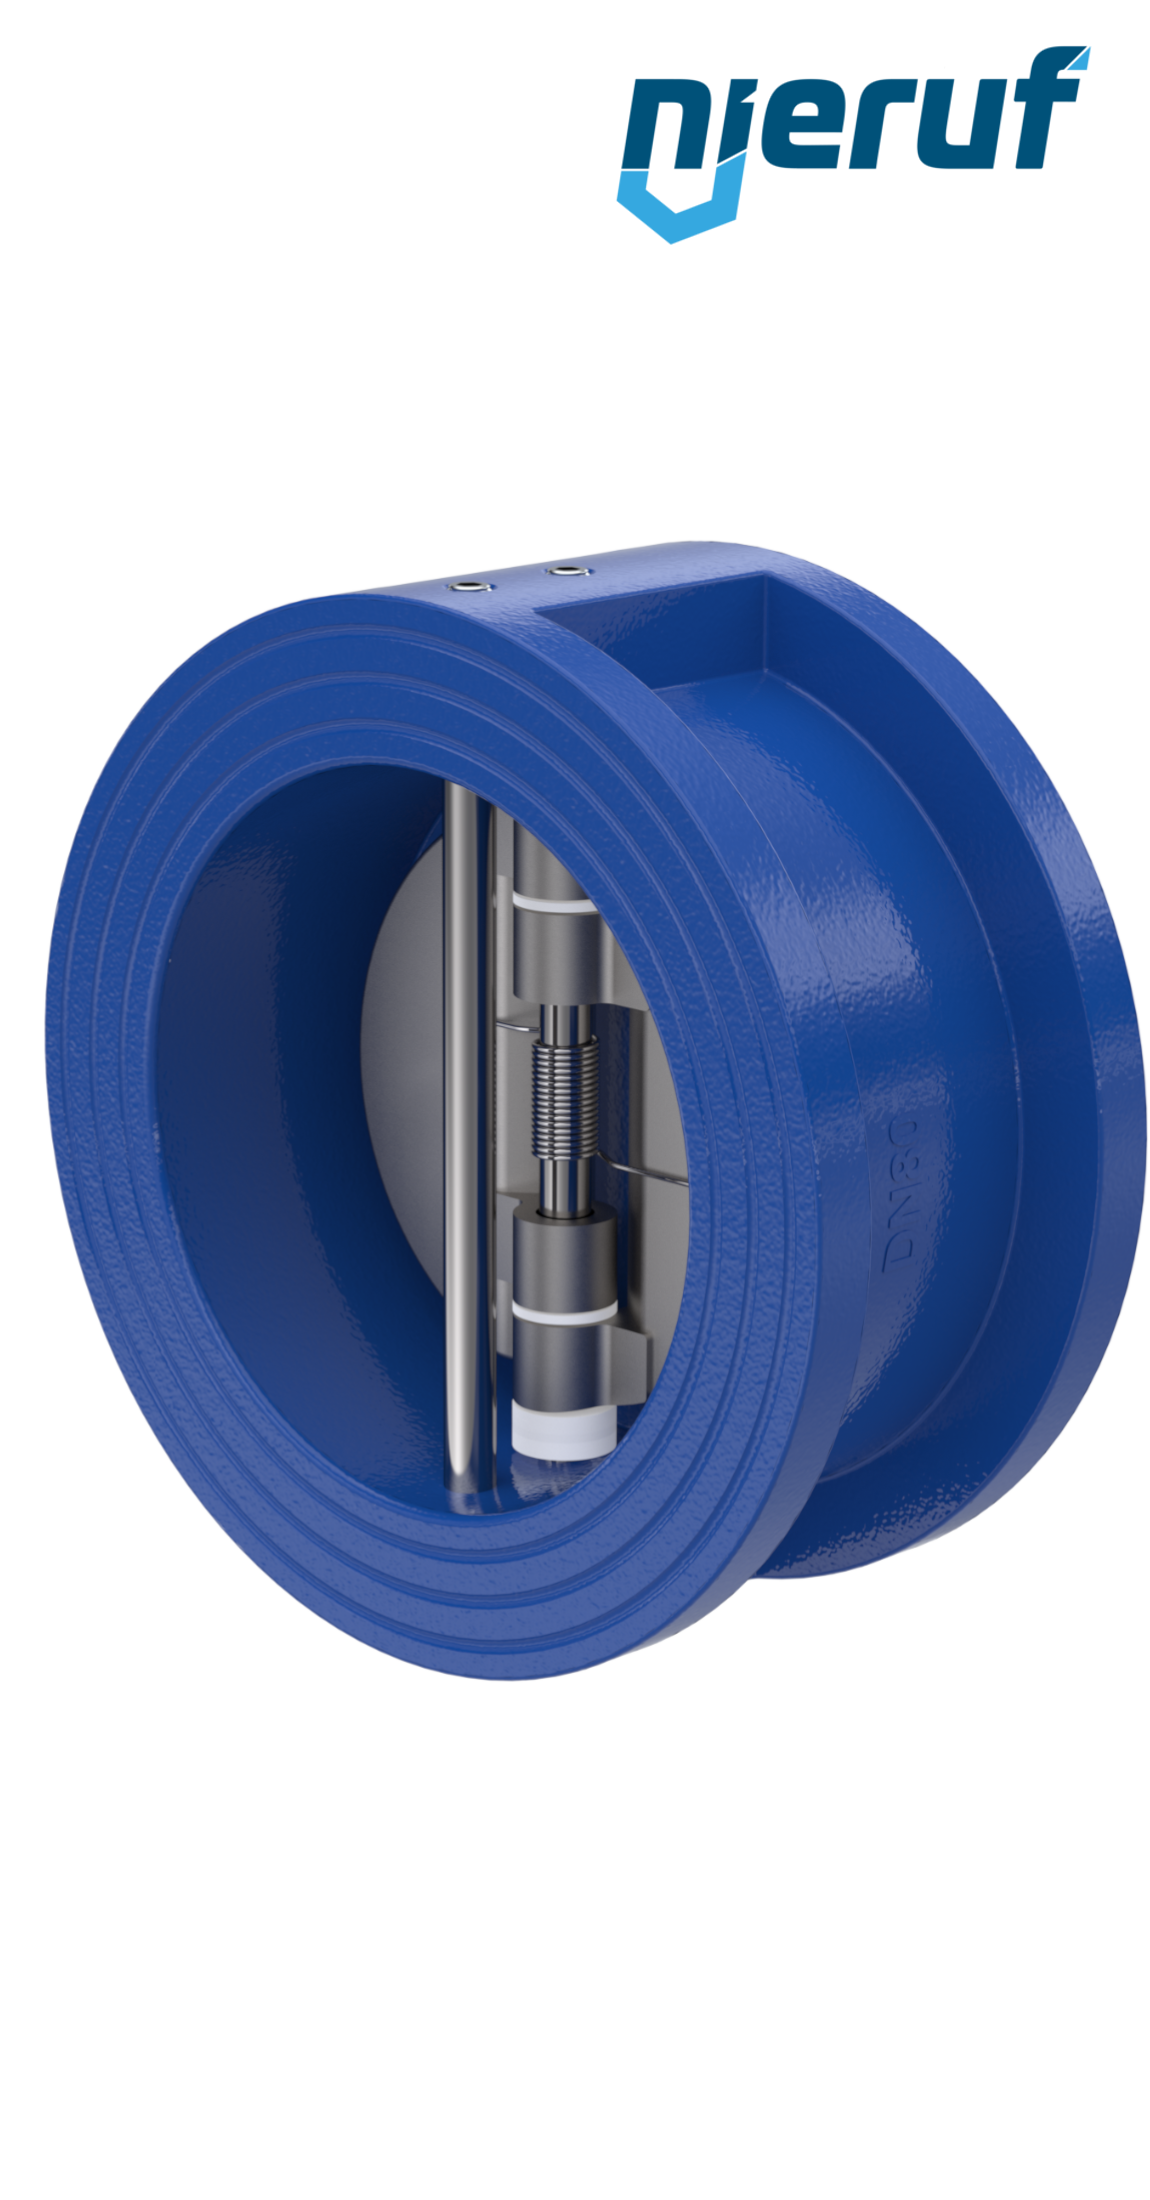 dual plate check valve DN80 DR02 GGG40 epoxyd plated blue 180µm FKM (Viton)